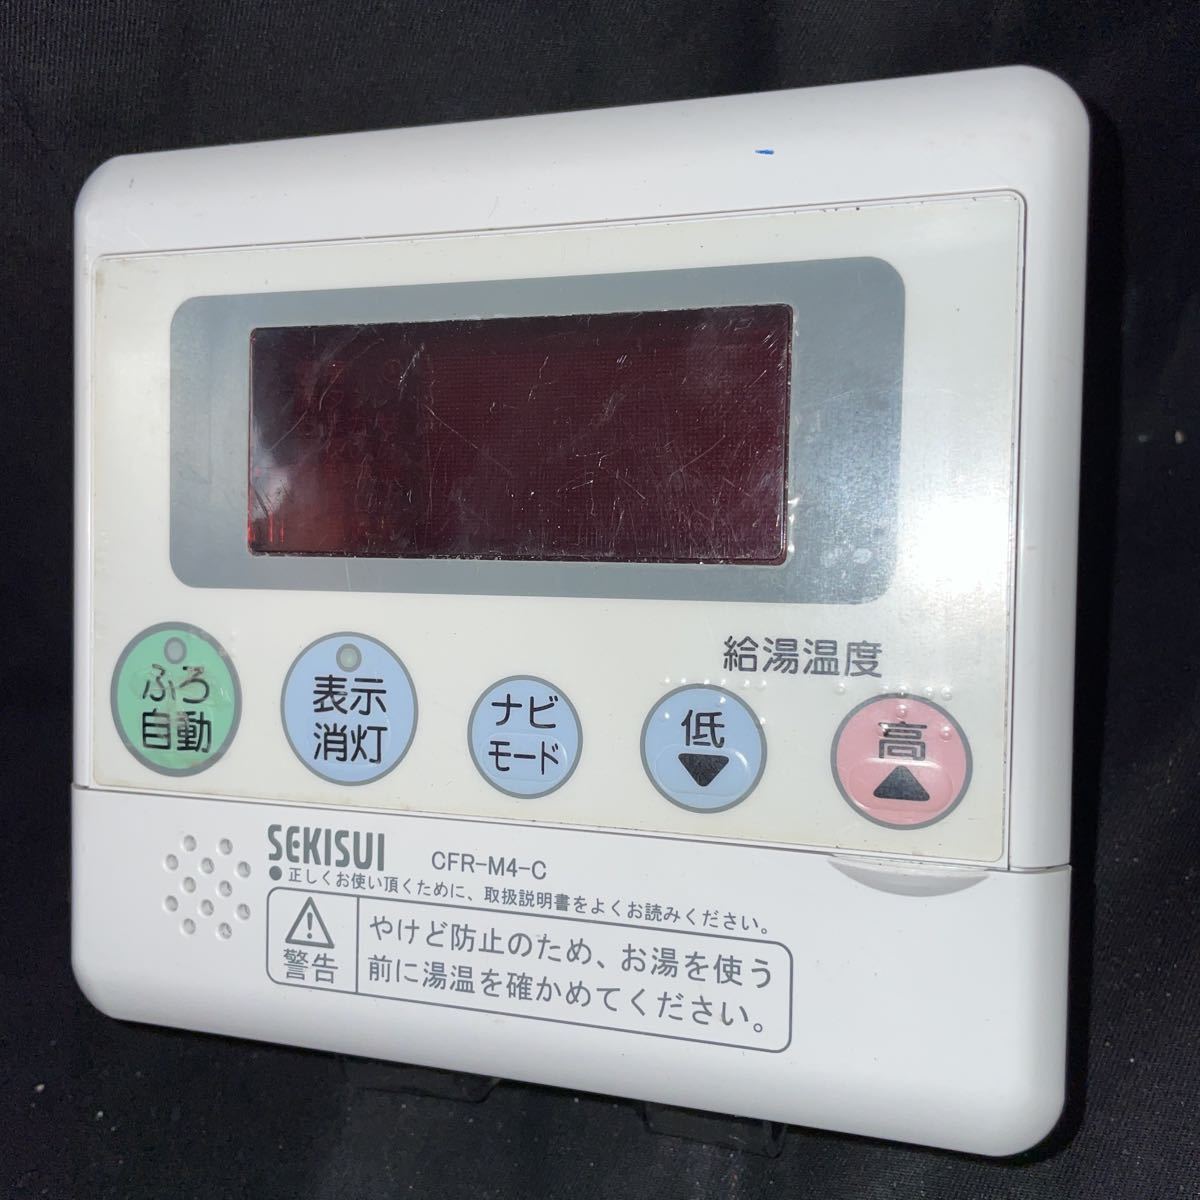 【即決】ZZ★HS-749 SEKISUI 給湯器 台所リモコン 動作未確認/返品不可 CFR-M4-C